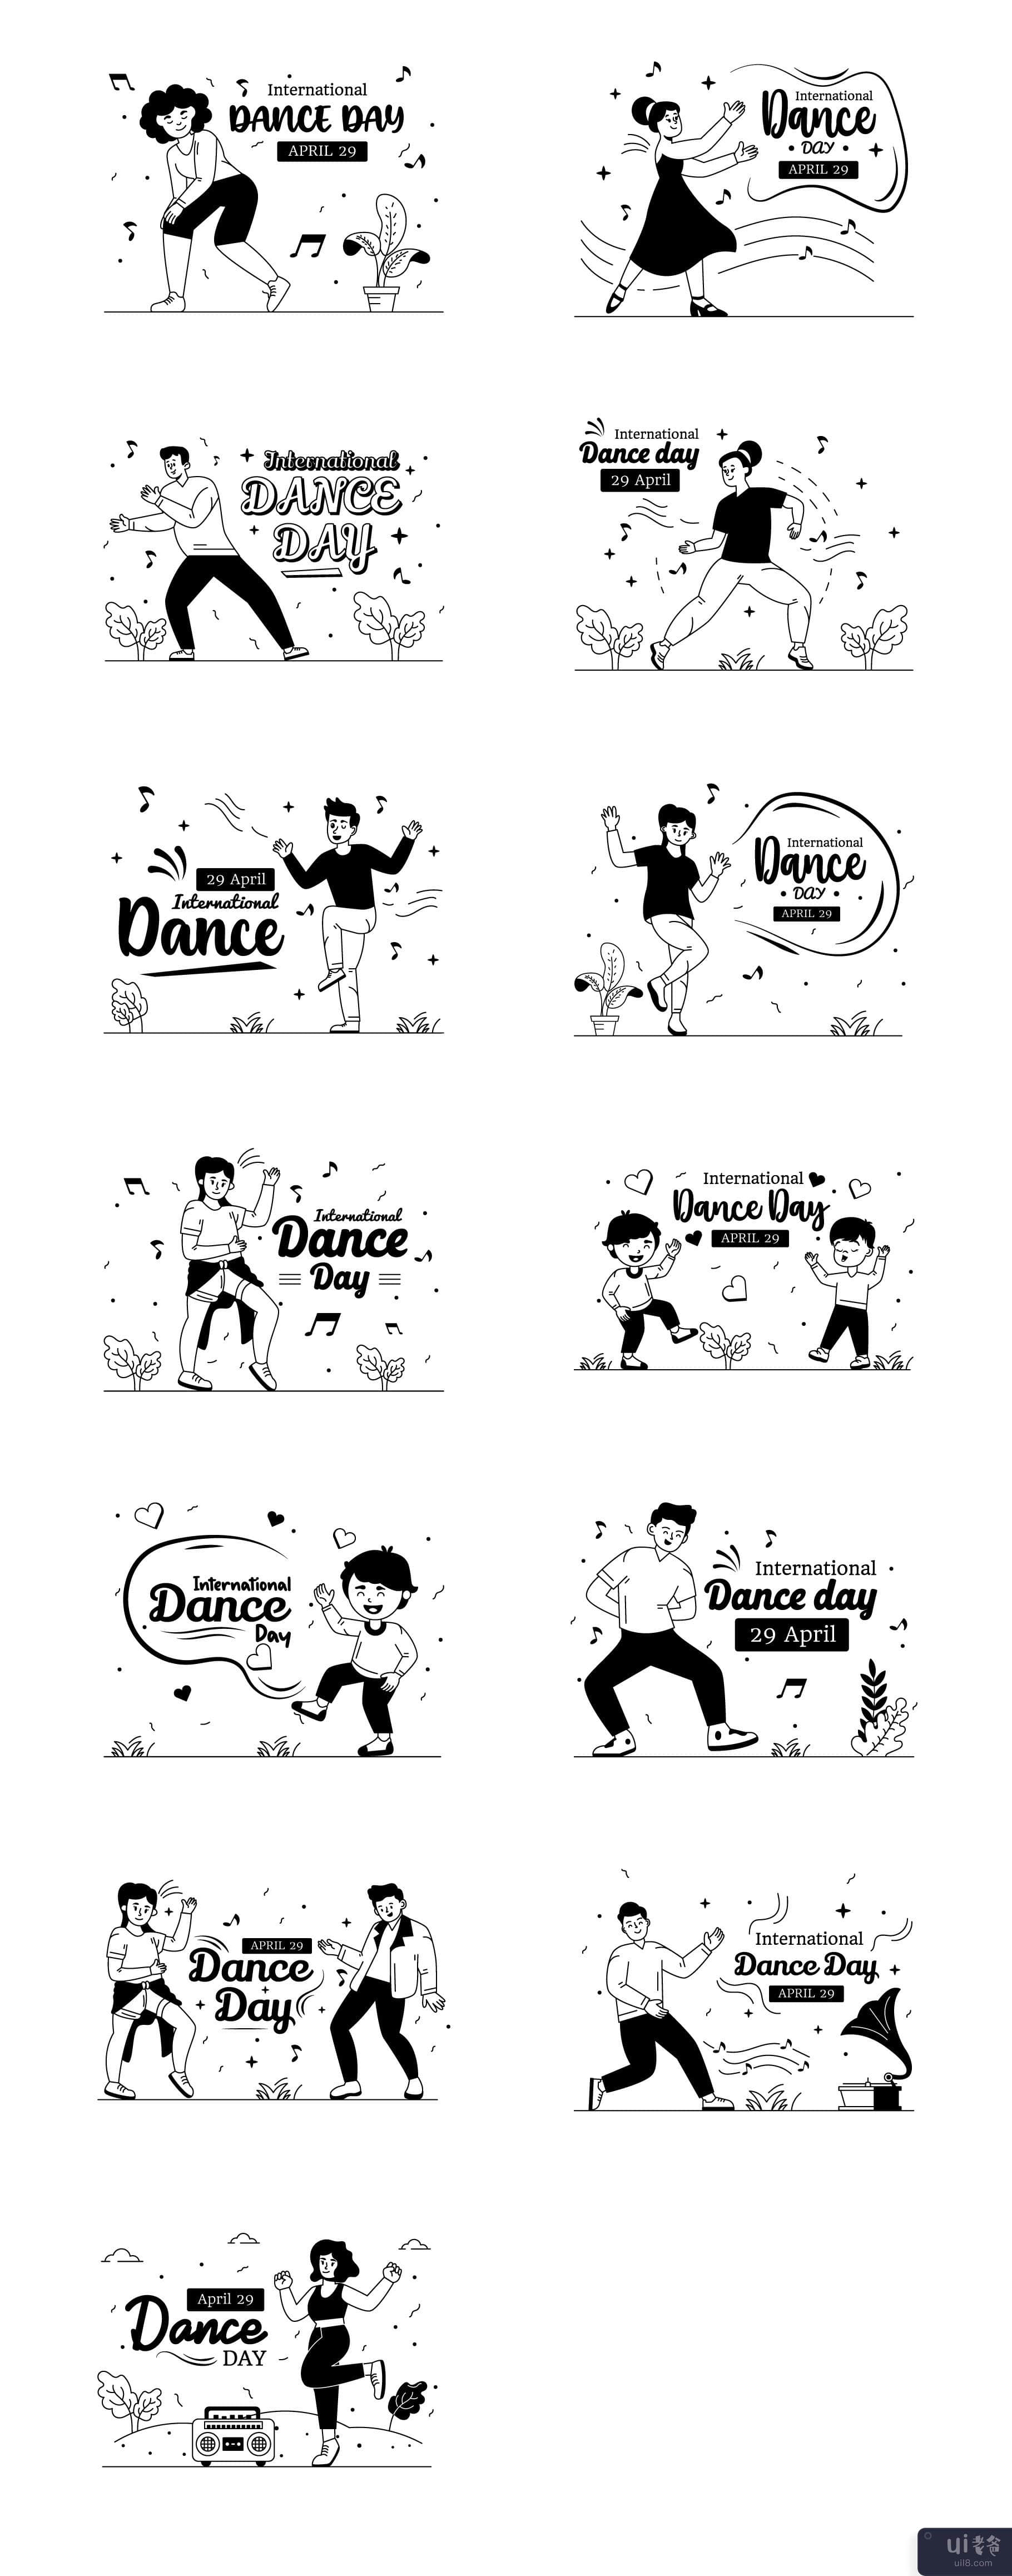 25 个国际舞蹈日插图(25 International Dance Day illustrations)插图